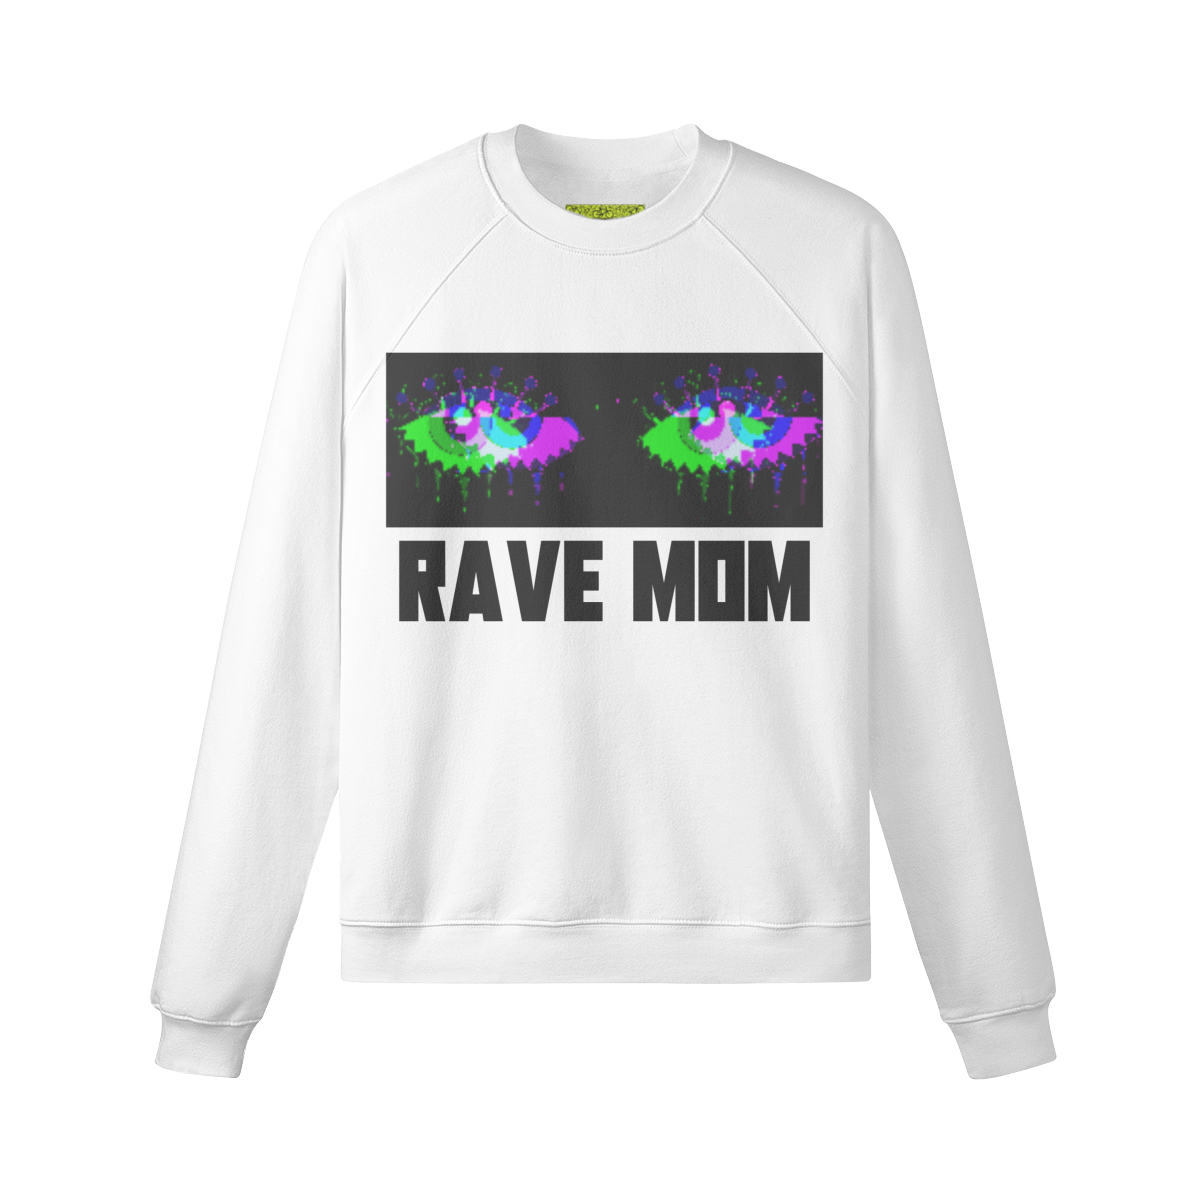 3RAVE MOM - Unisex Fleece-lined Sweatshirt - front - white